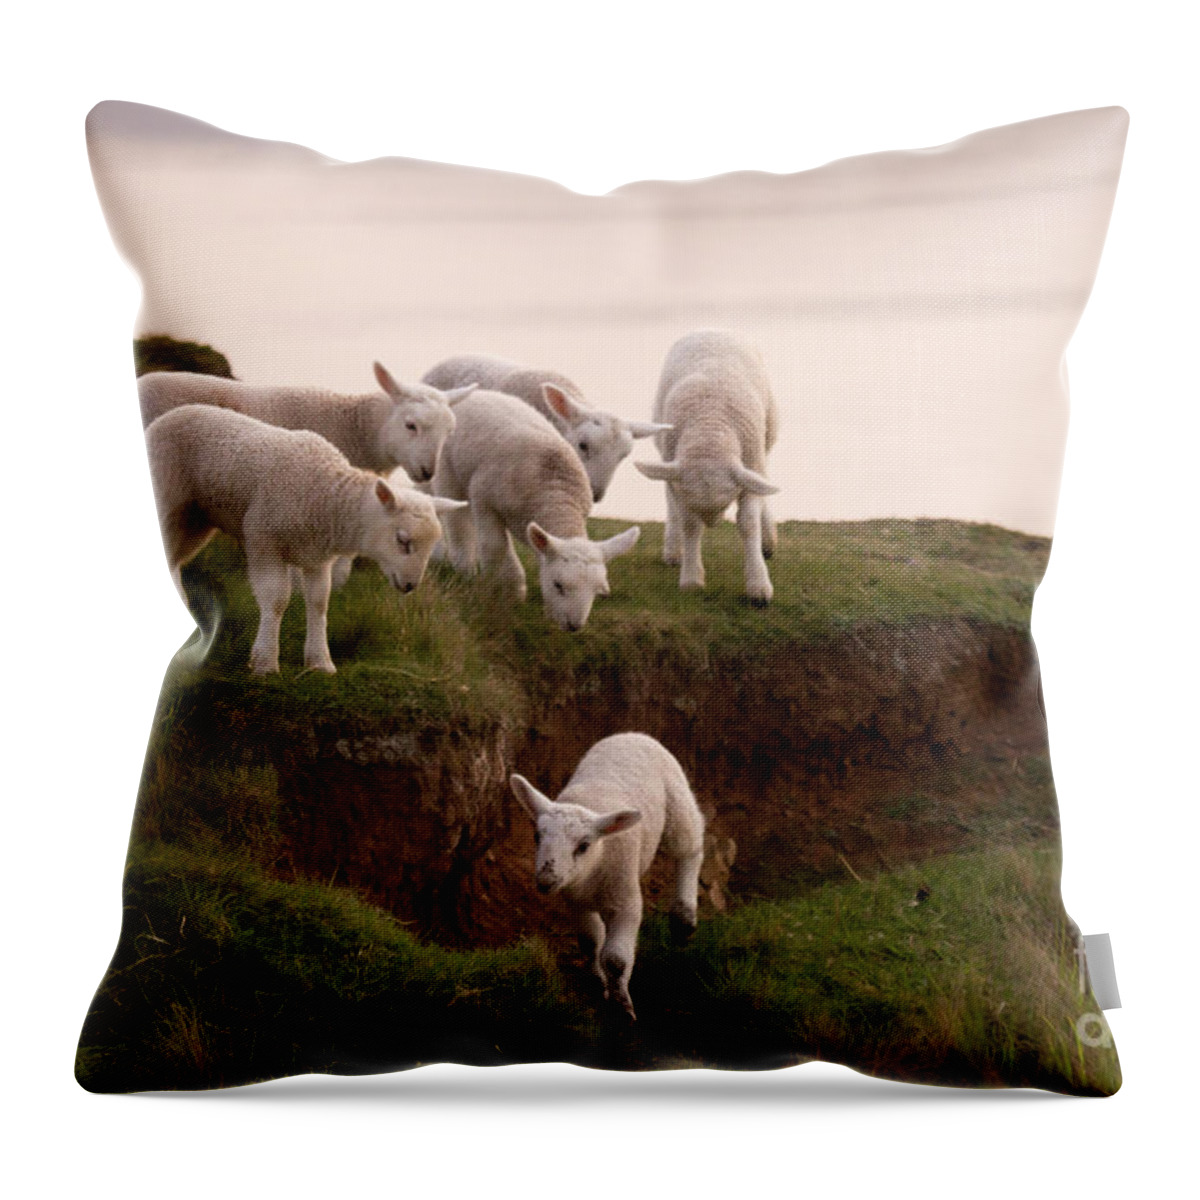 Prancing Lamb Throw Pillow featuring the photograph Welsh Lambs by Ang El